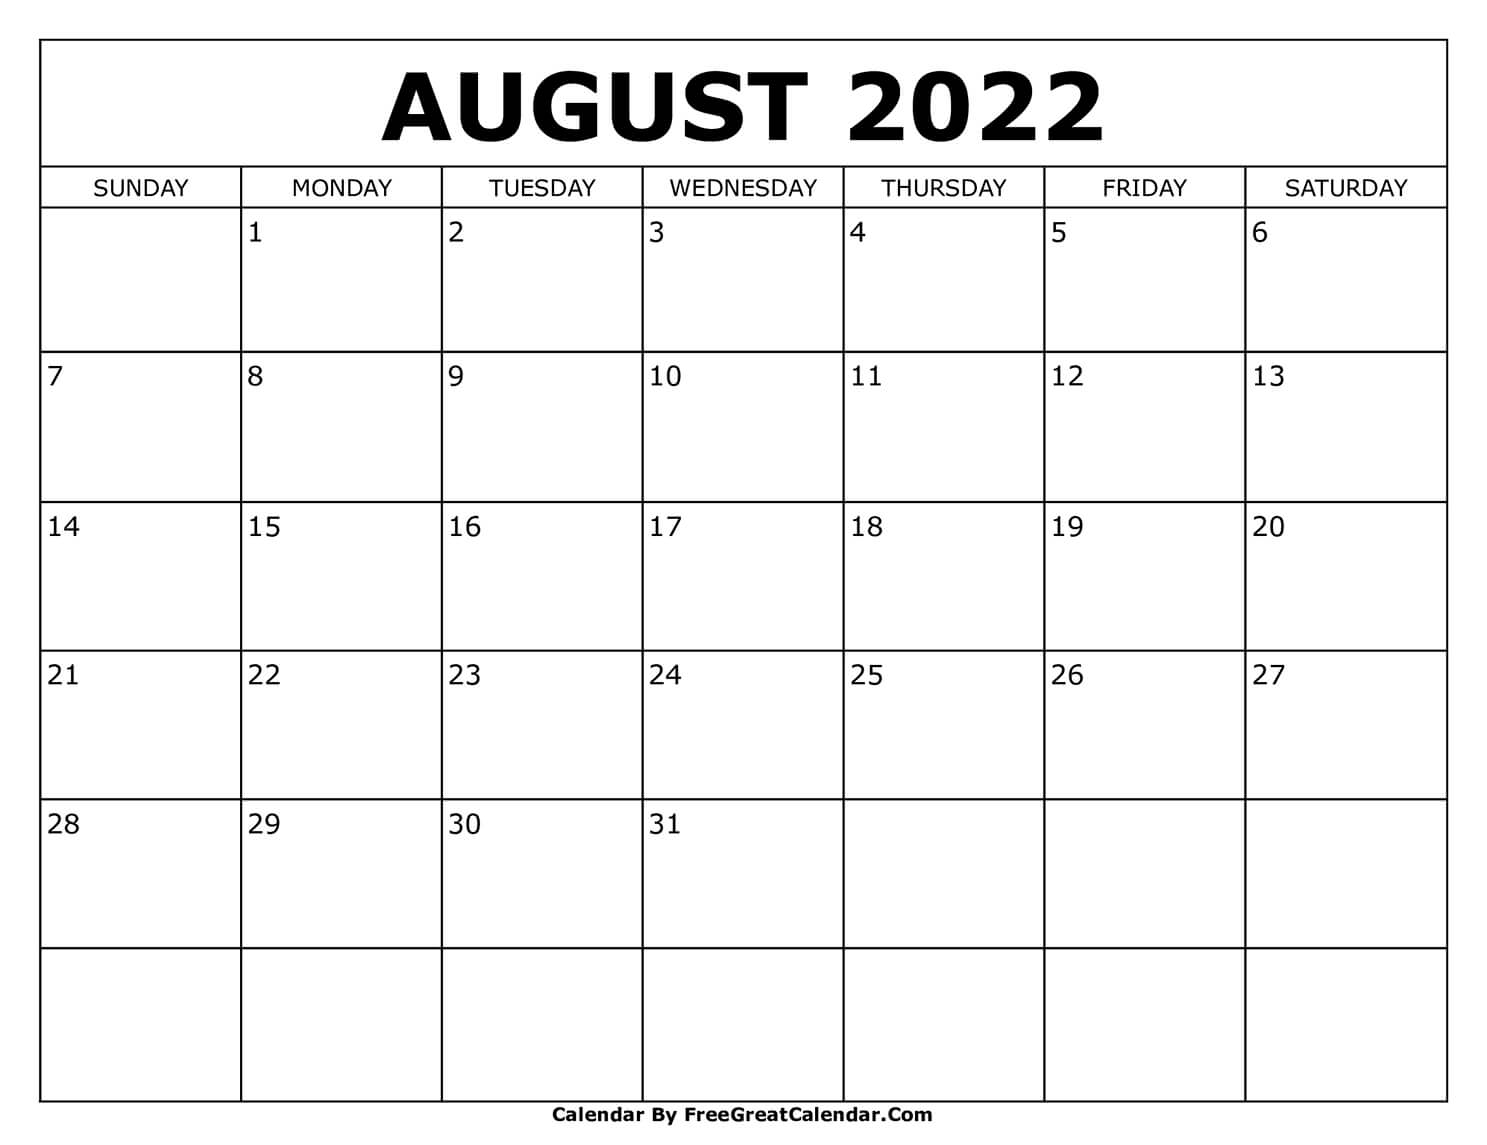 Free Printable August 2022 Calendar Free Printable August 2022 Calendar